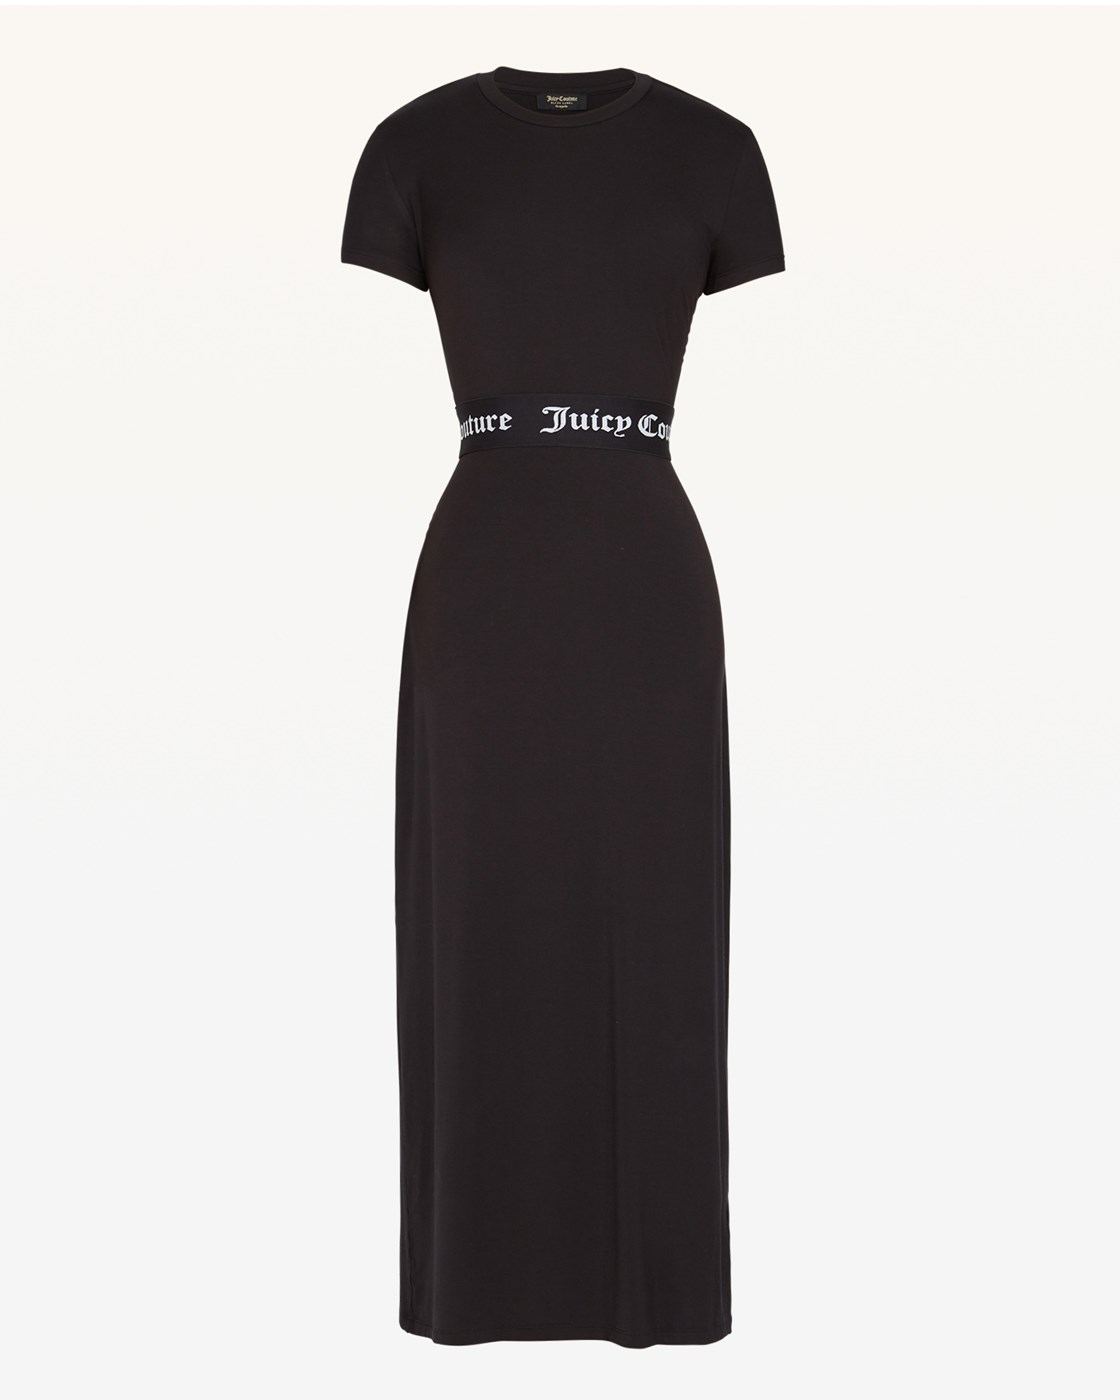 Juicy Couture Jacquard T-Shirt Dress